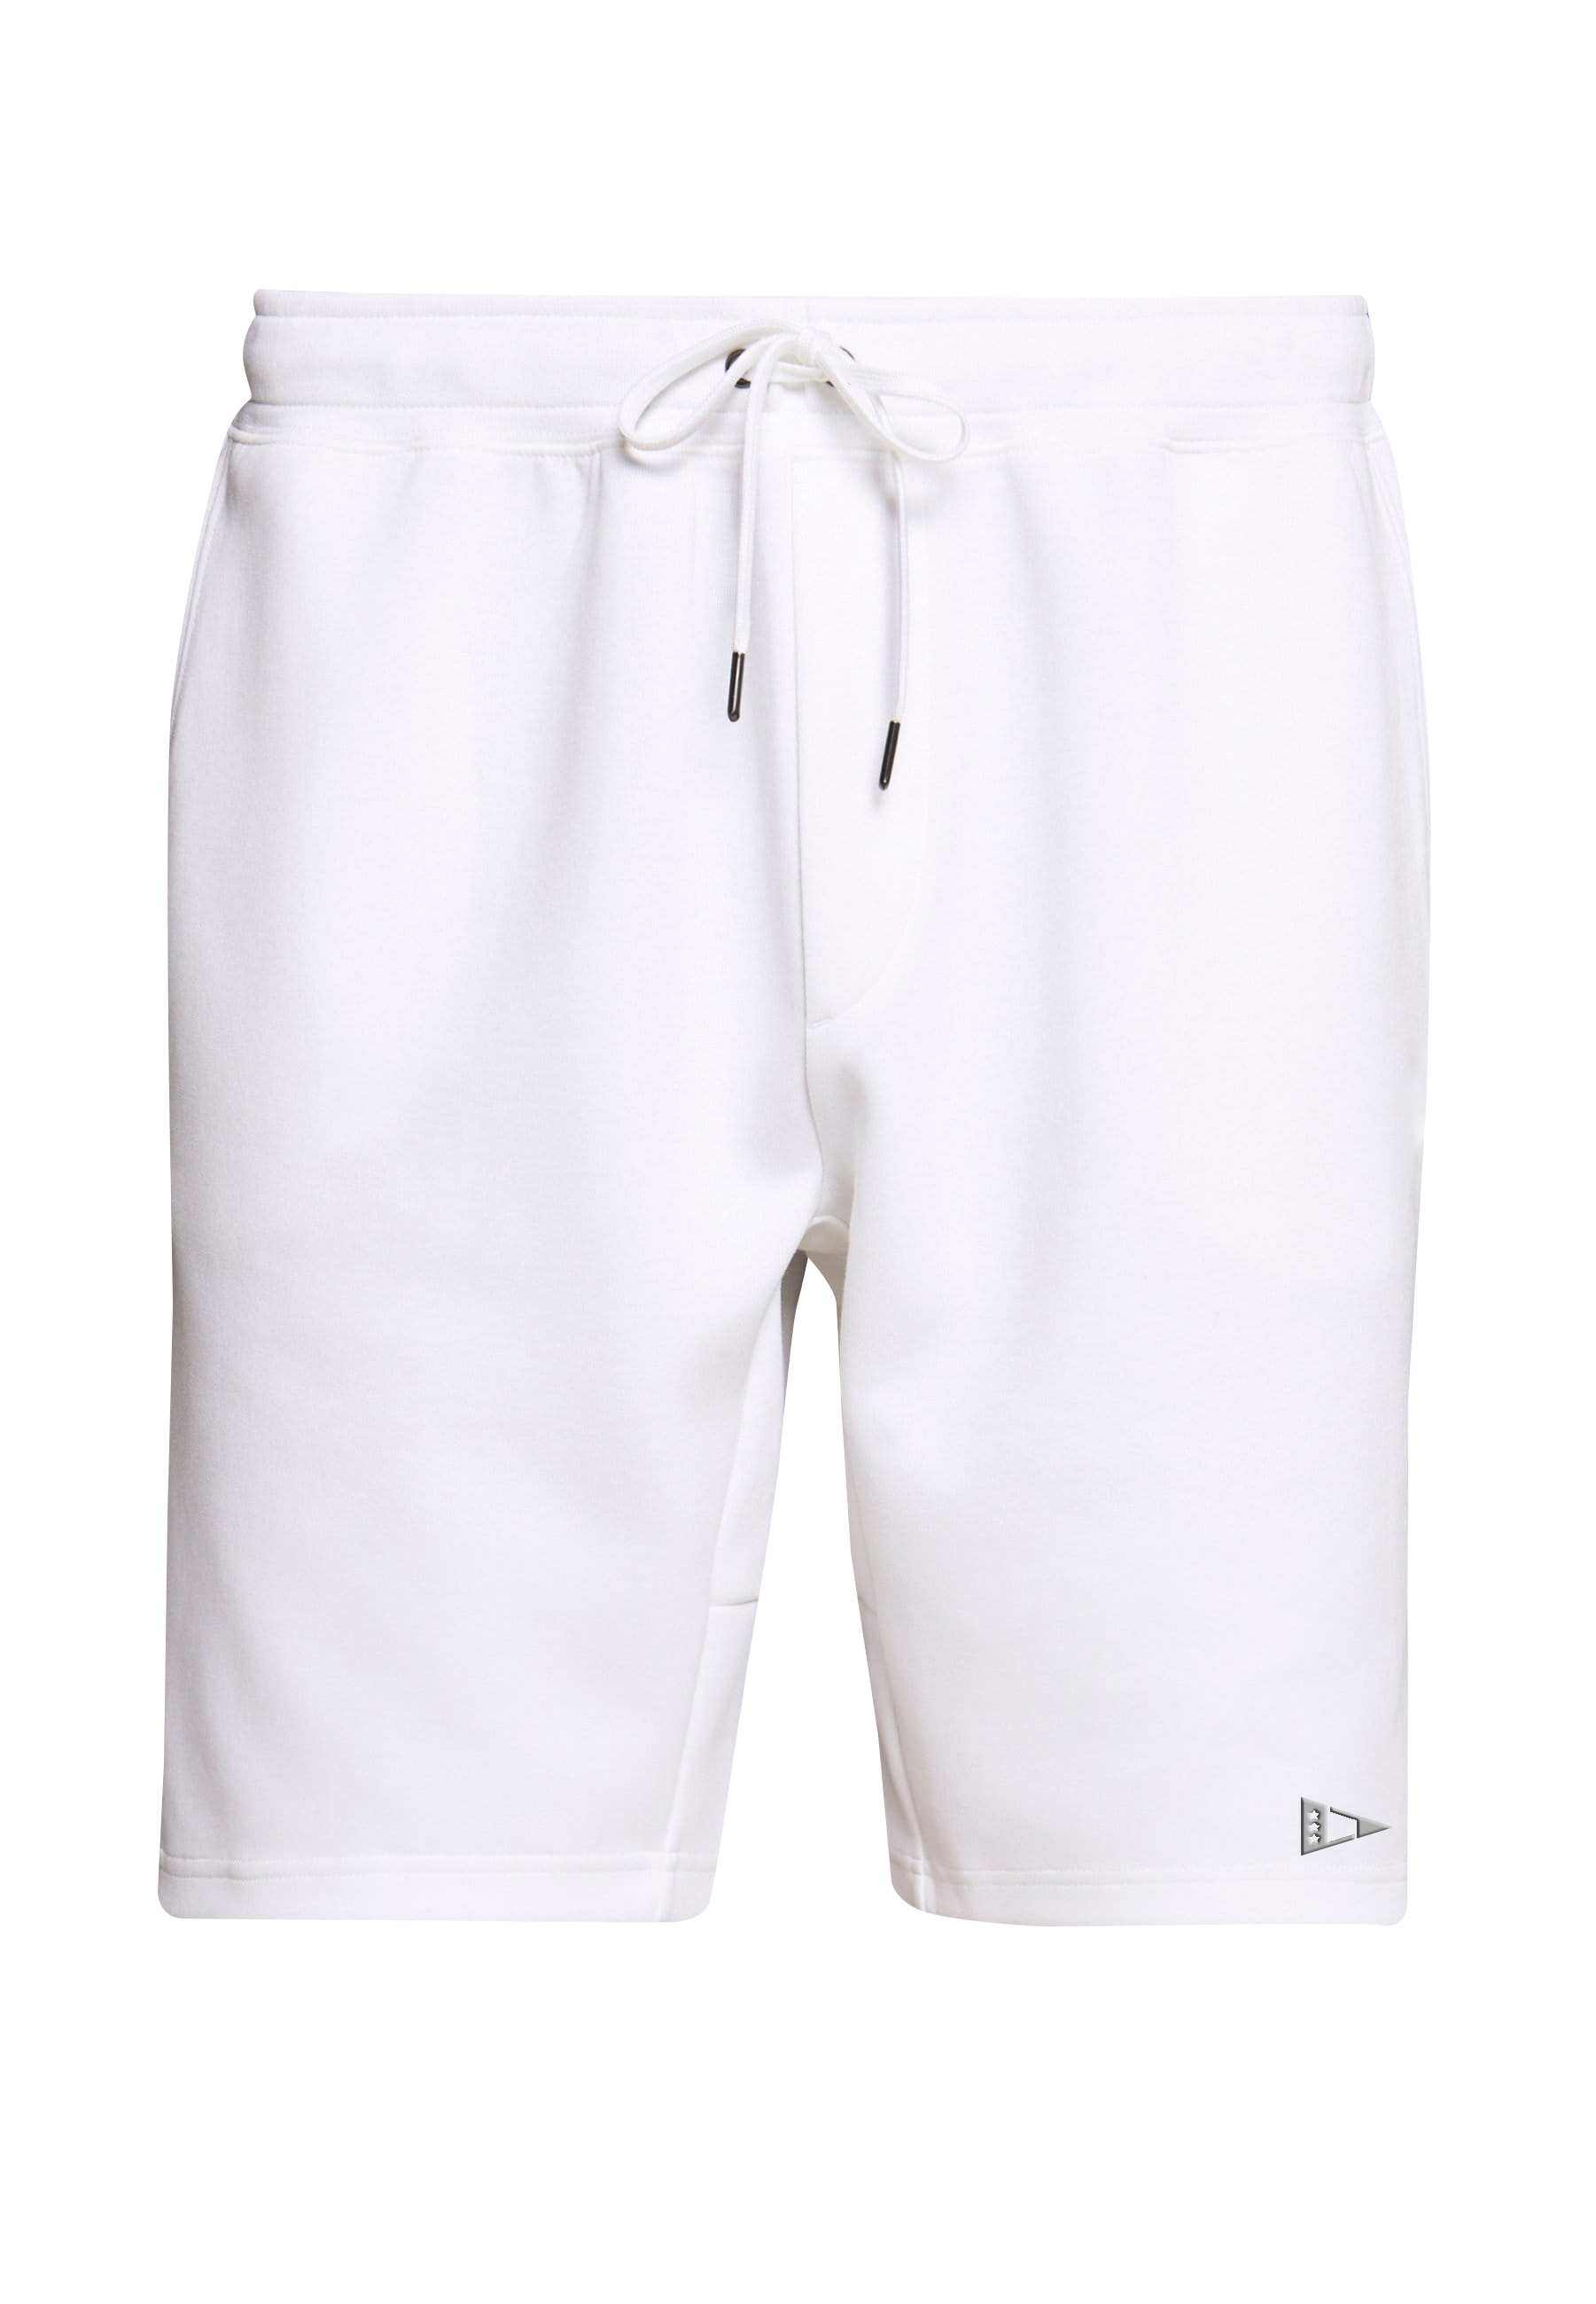 Спортивные шорты мужские Scuola Nautica Italiana 018510 белые 2XL